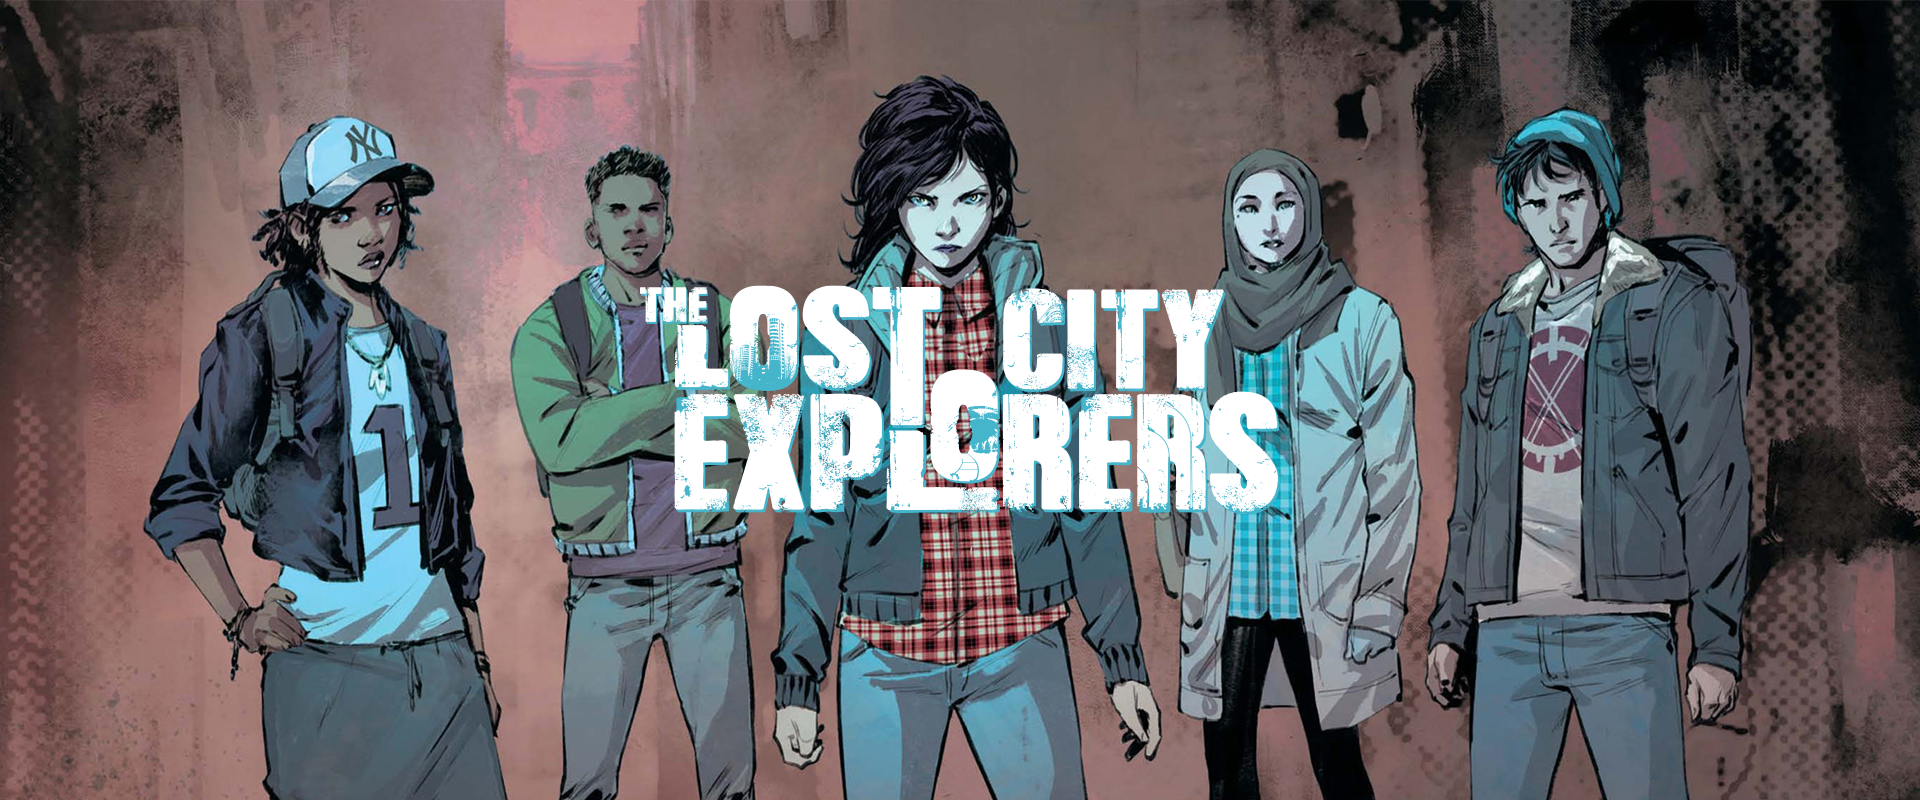 Lost-City-Explorers-Carousal